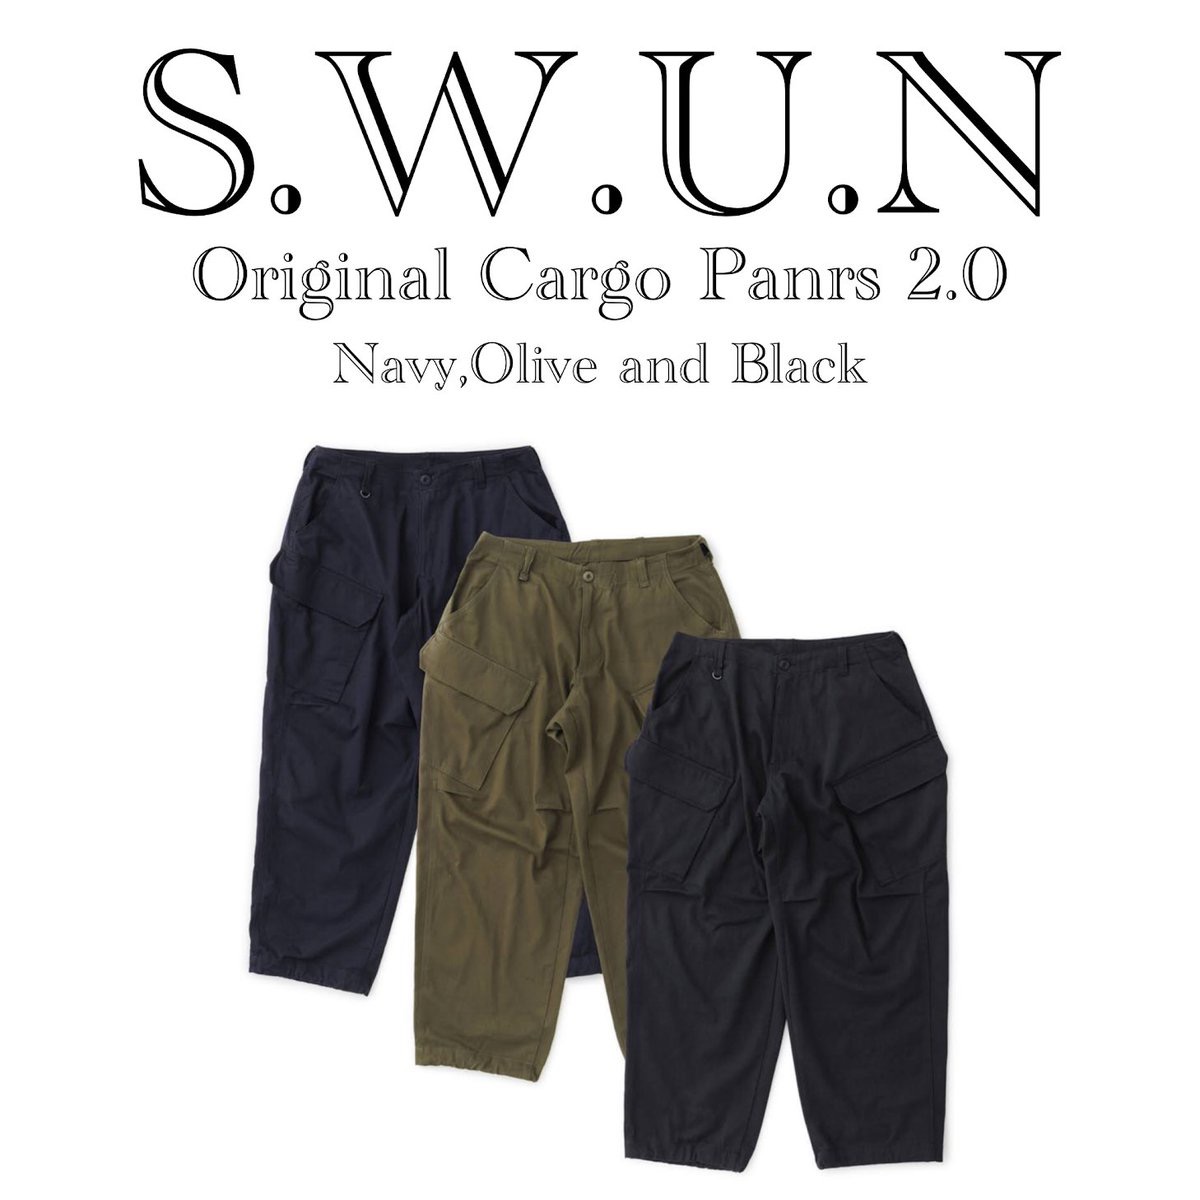 S.W.U.N 『Original Cargo Pants 2.0』の抽選販売受付が3月22日まで ...